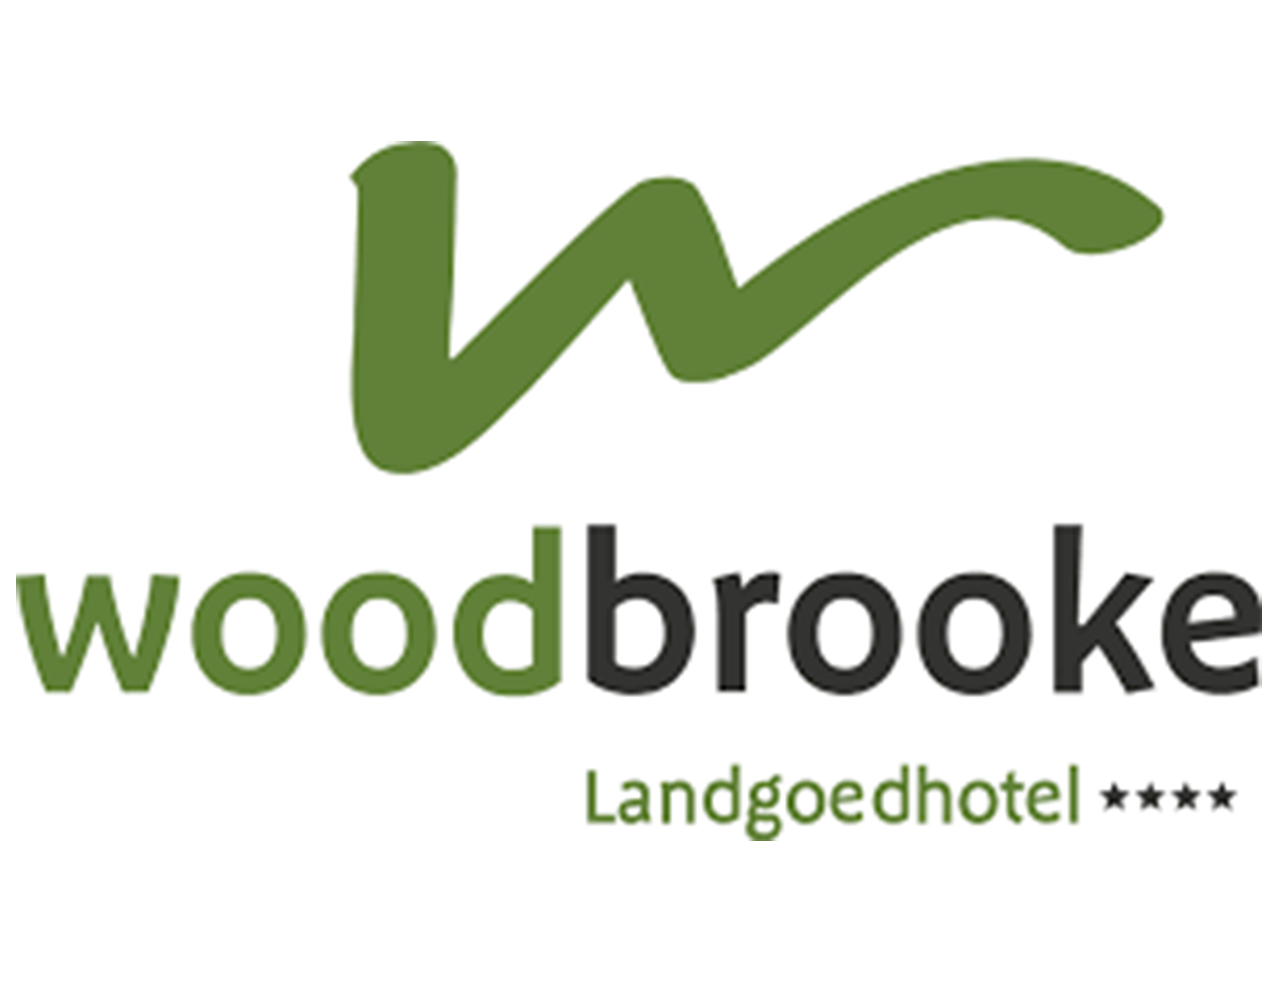 Landgoedhotel Woodbrooke in Barchem. Horeca partner Ultimate Adventures